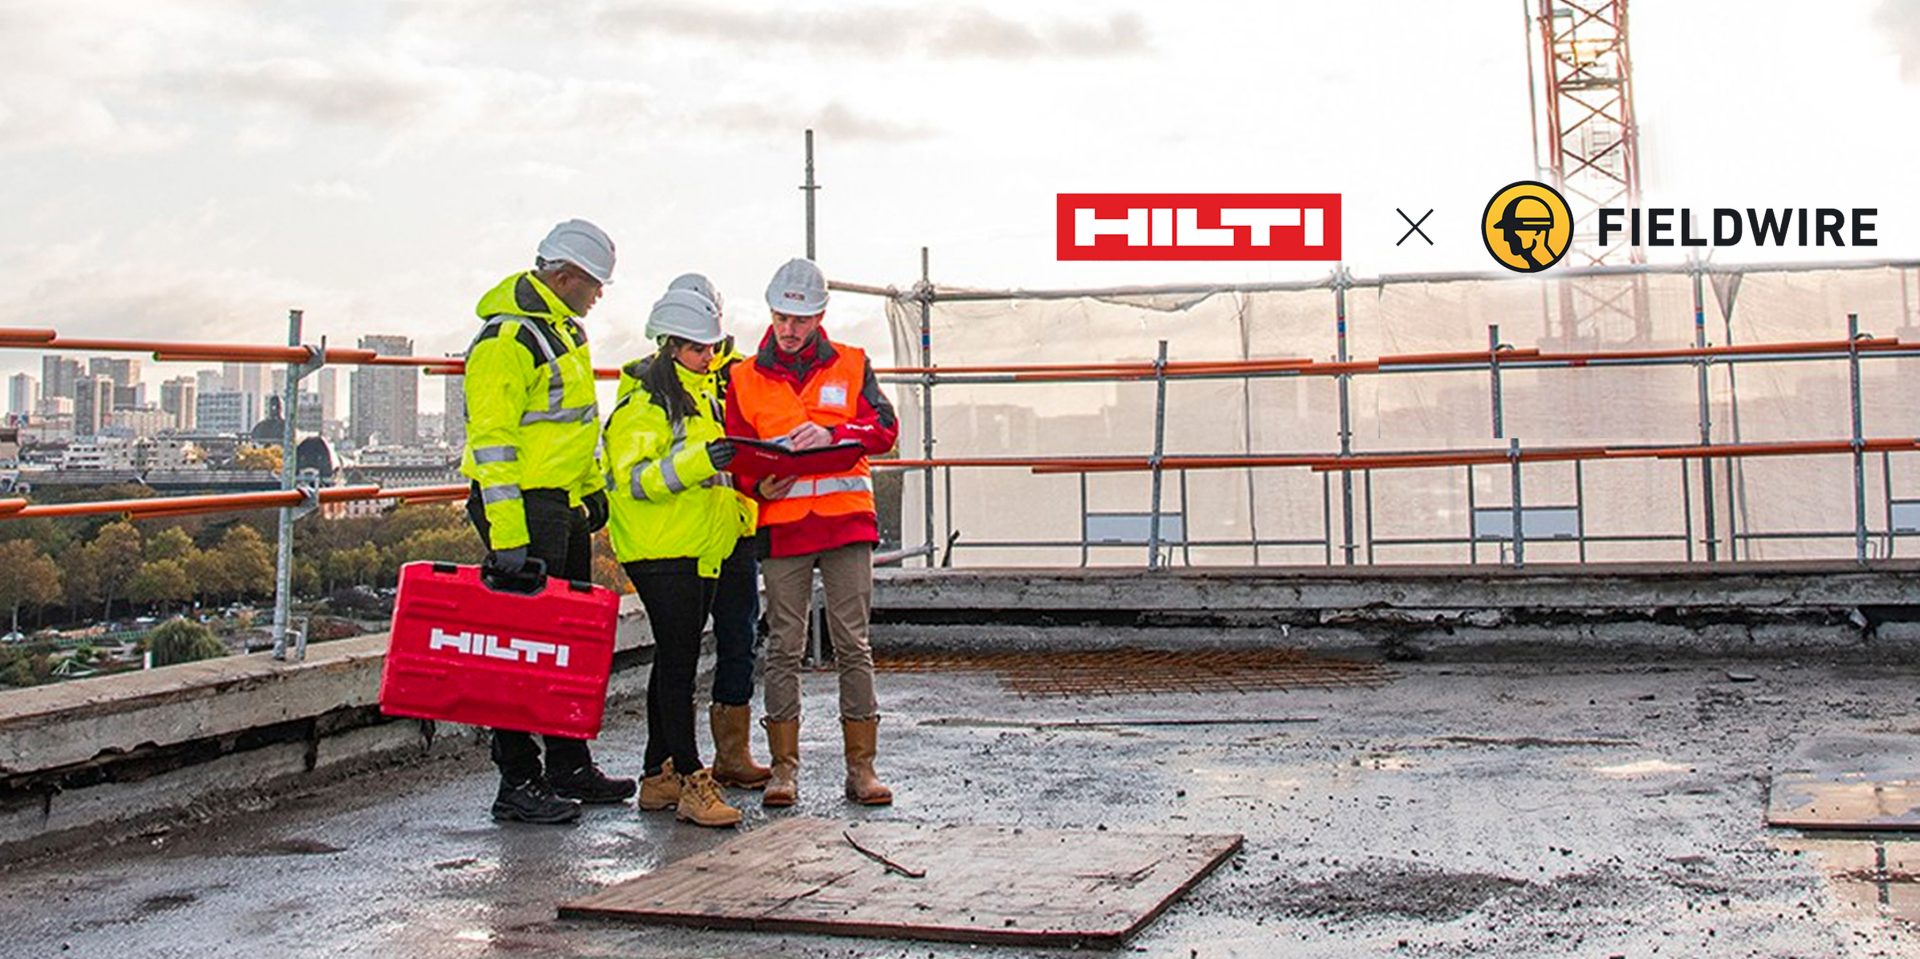 Fieldwire joins Hilti to establish the leading construction jobsite management platform